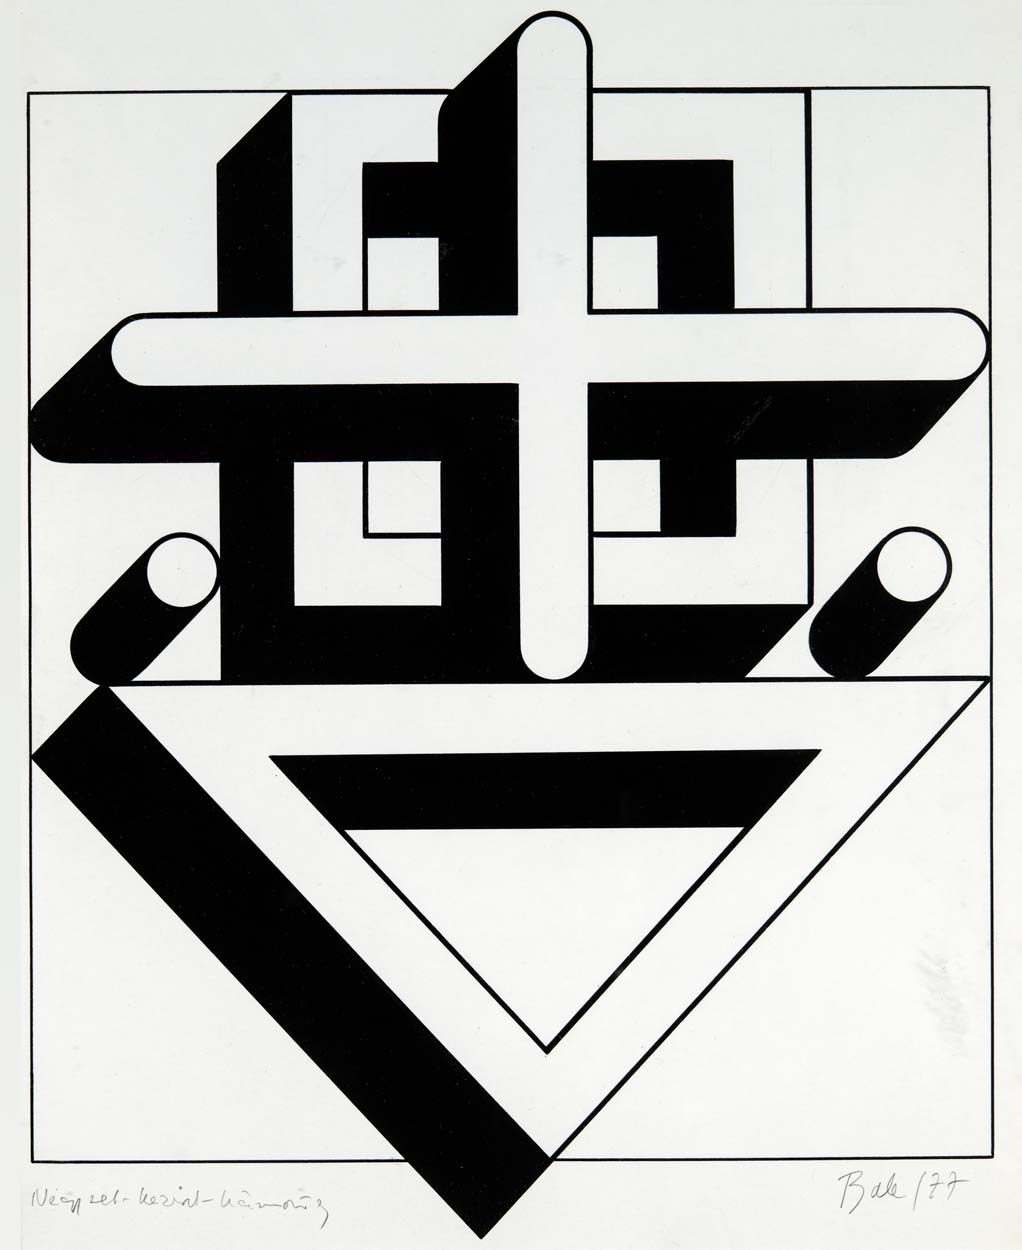 Bak Imre (1939-) Square-Cross-Triangle, 1977